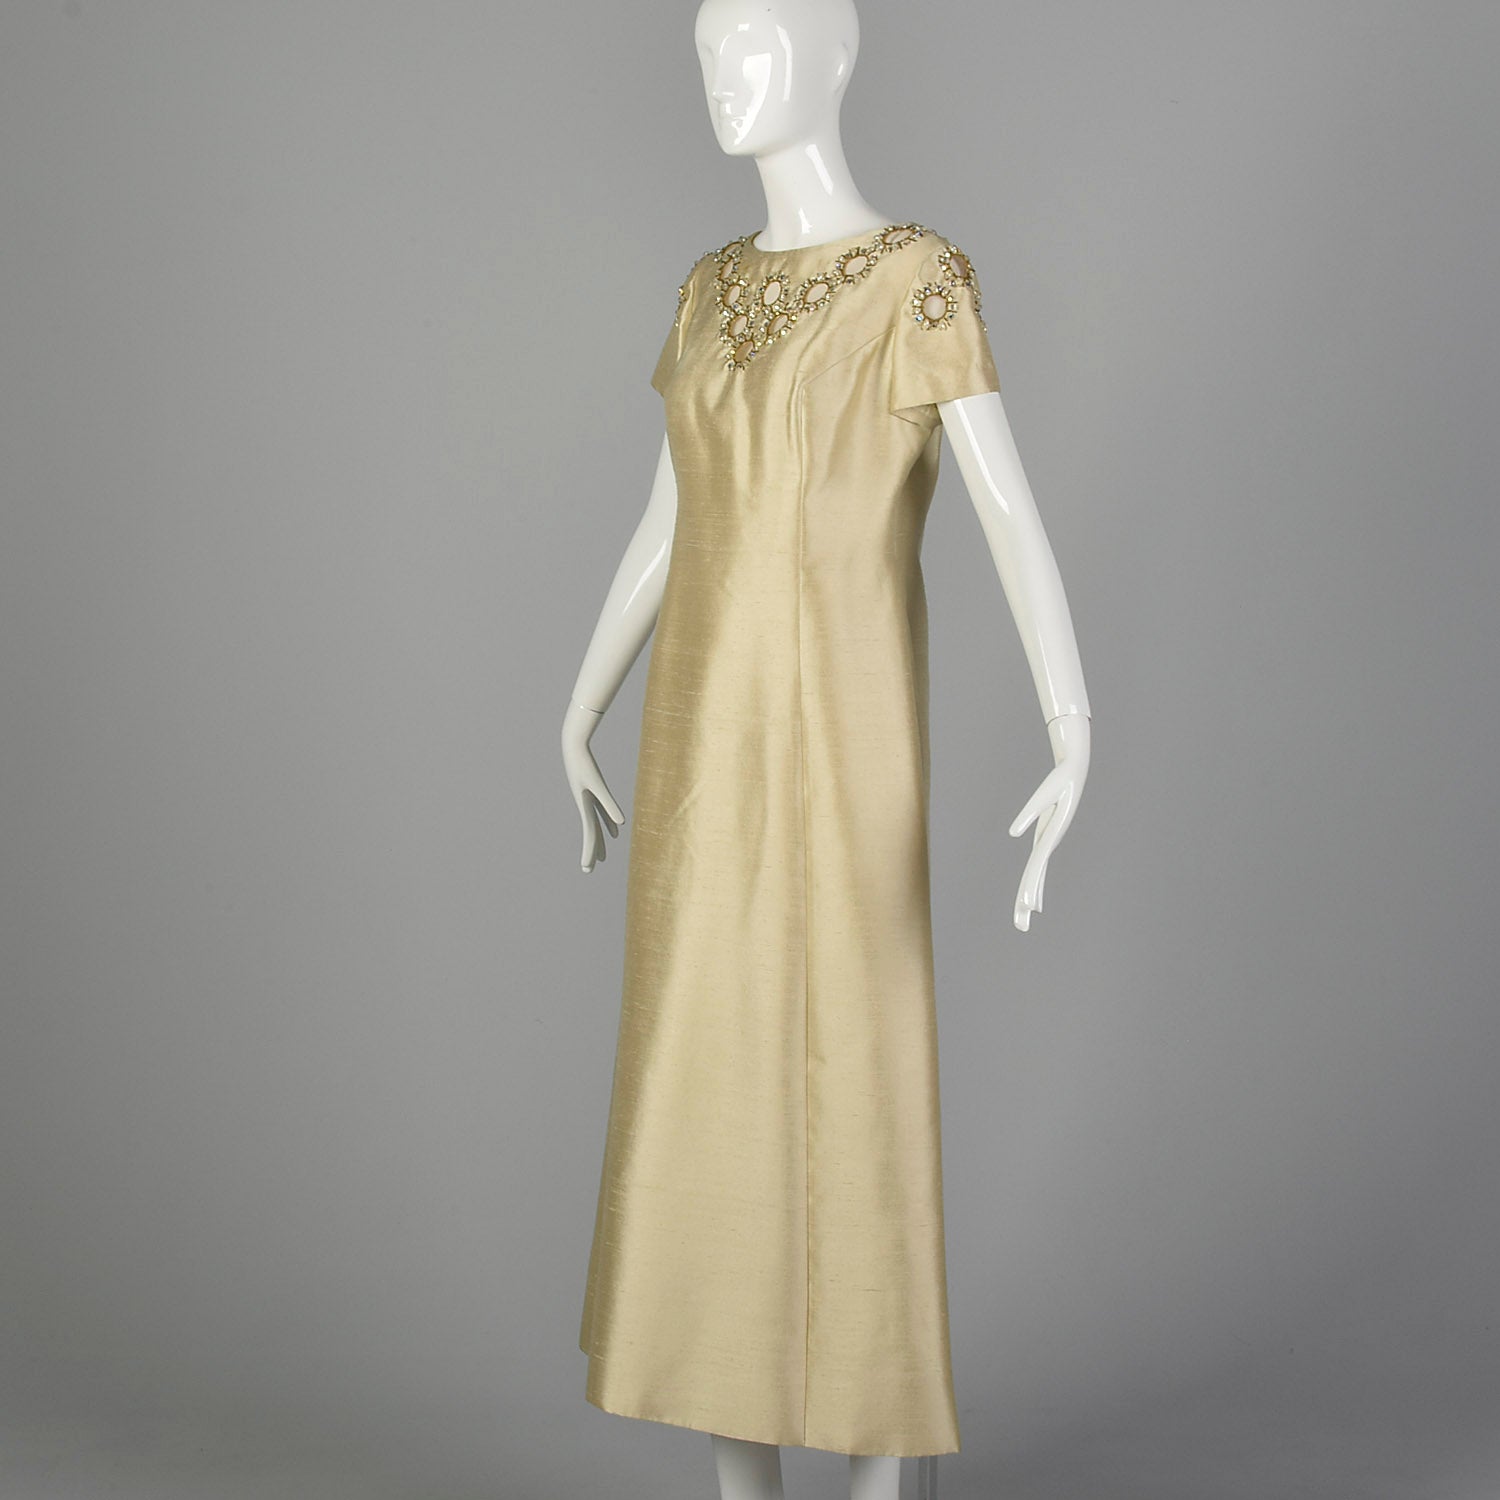 Medium 1960s Beaded Ivory Gold Shift Dress